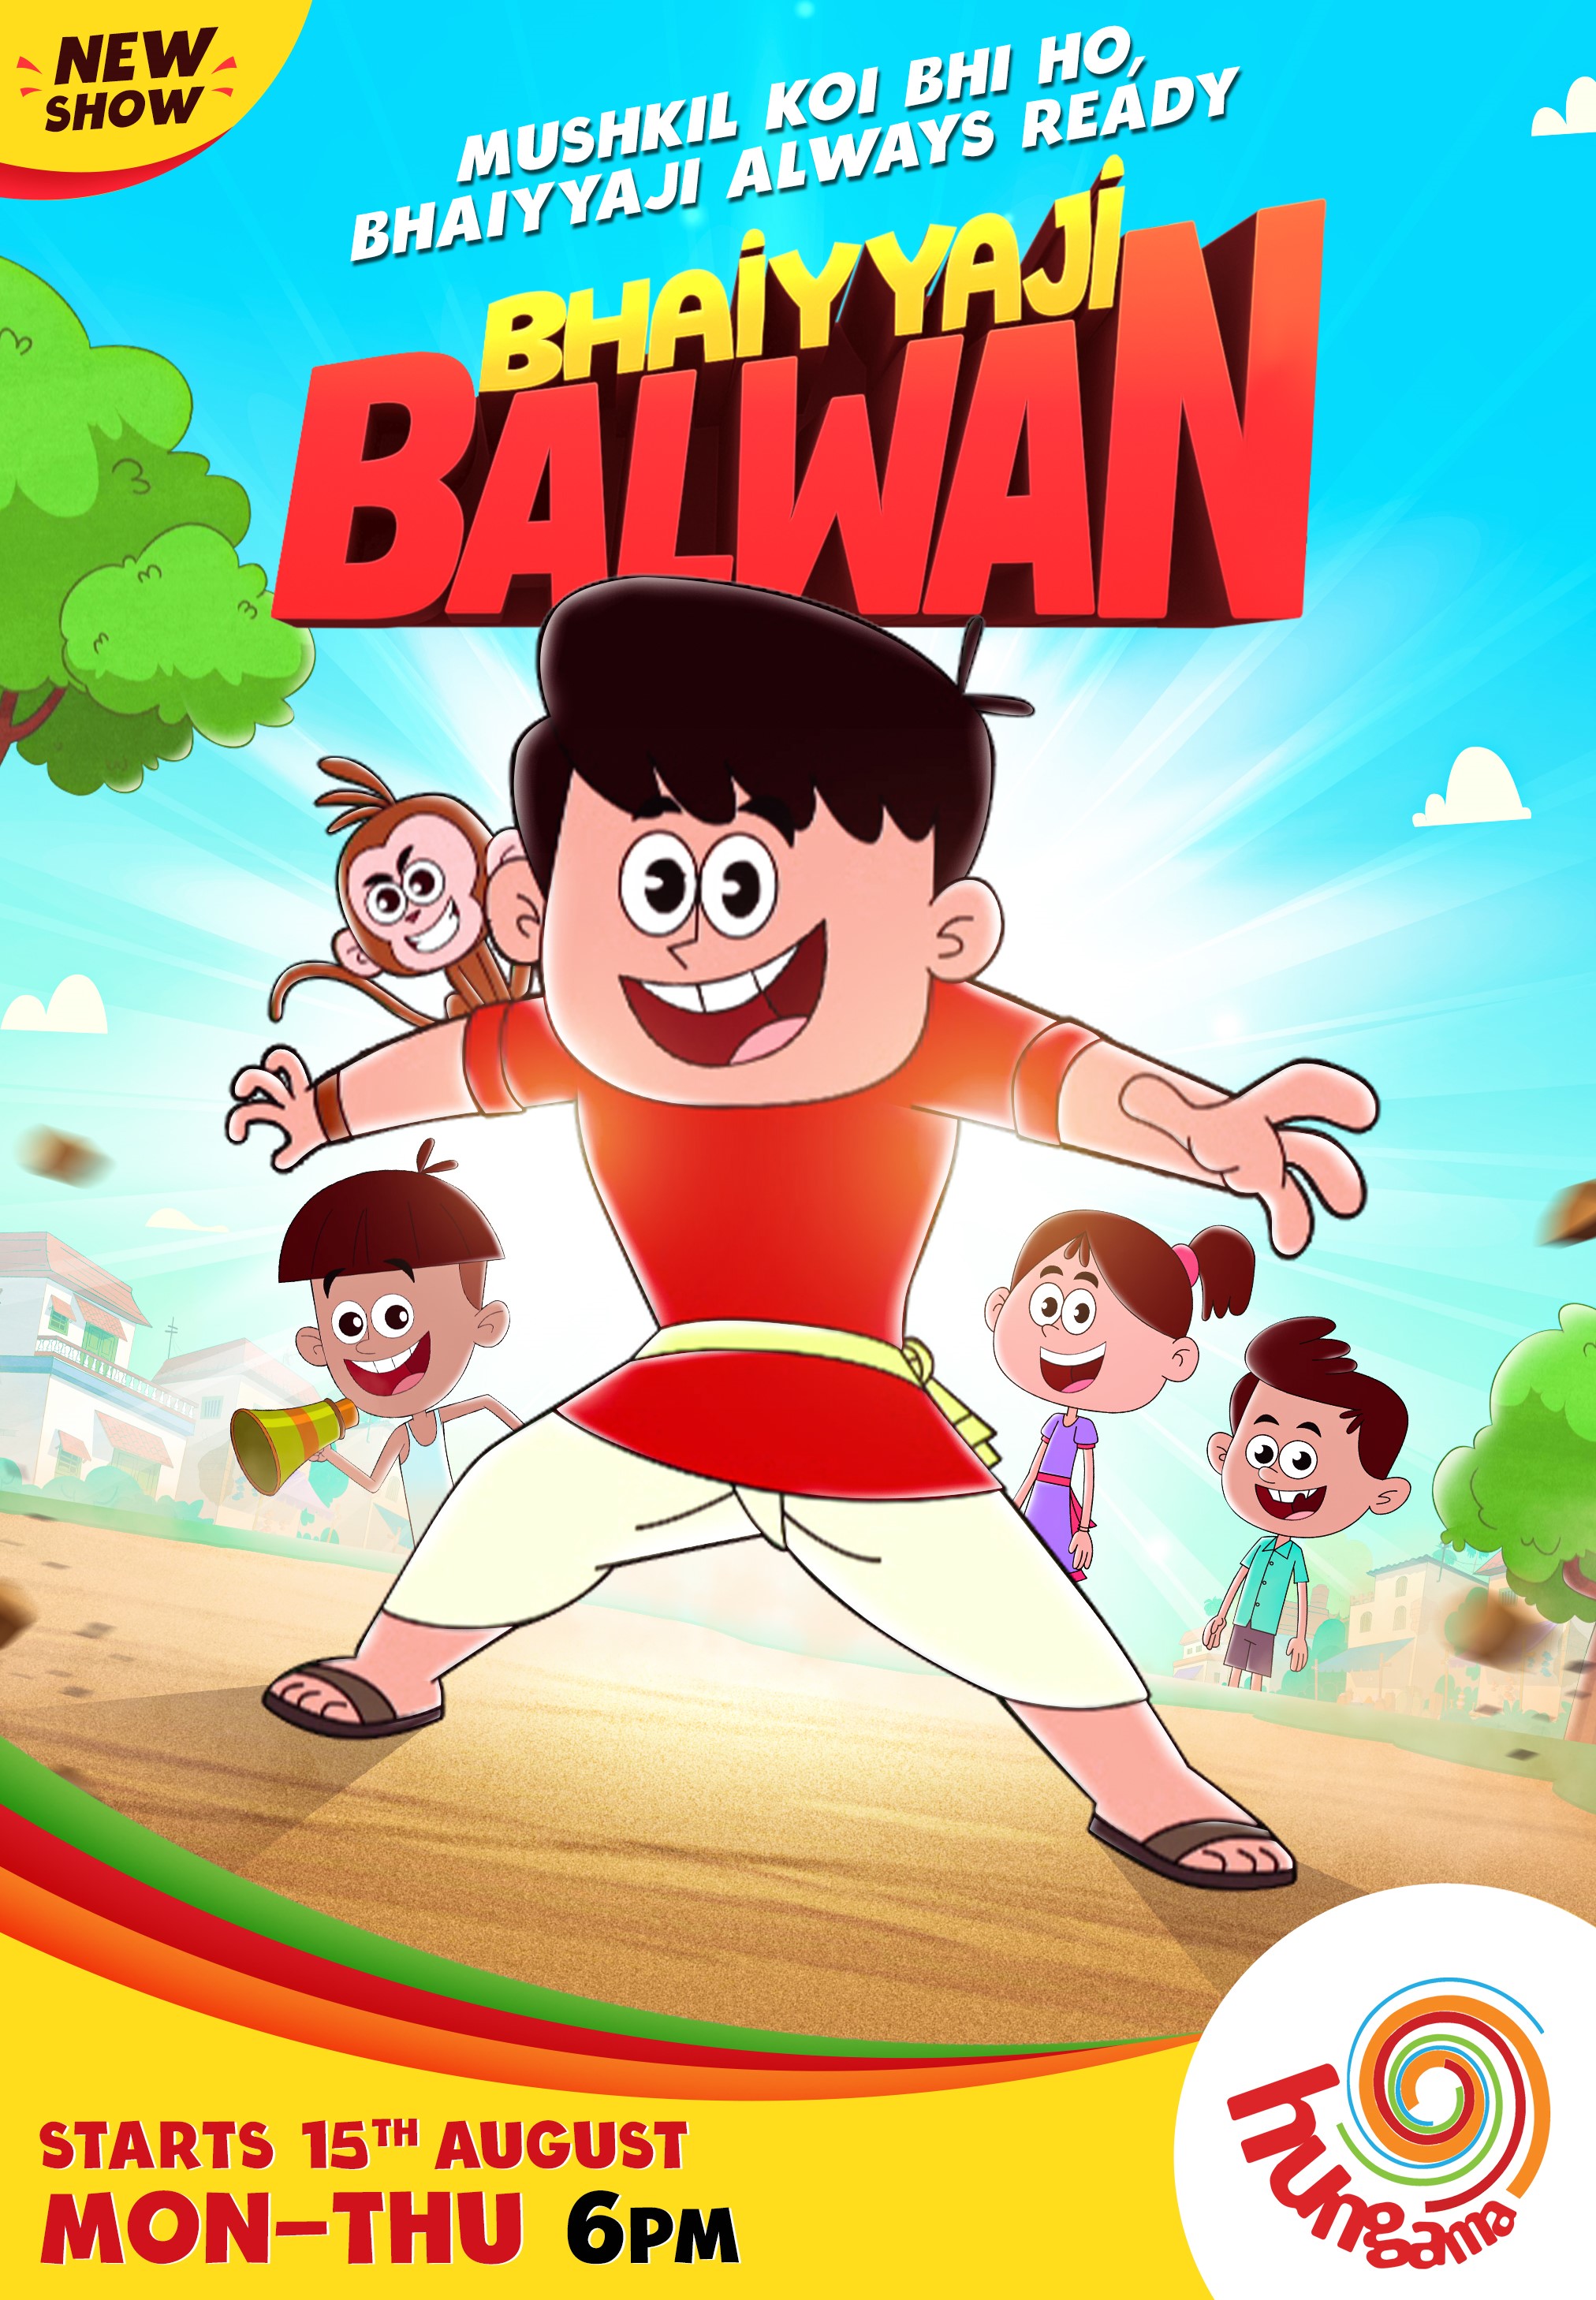 Bhaiyyaji Balwan Animated Official Release Poster